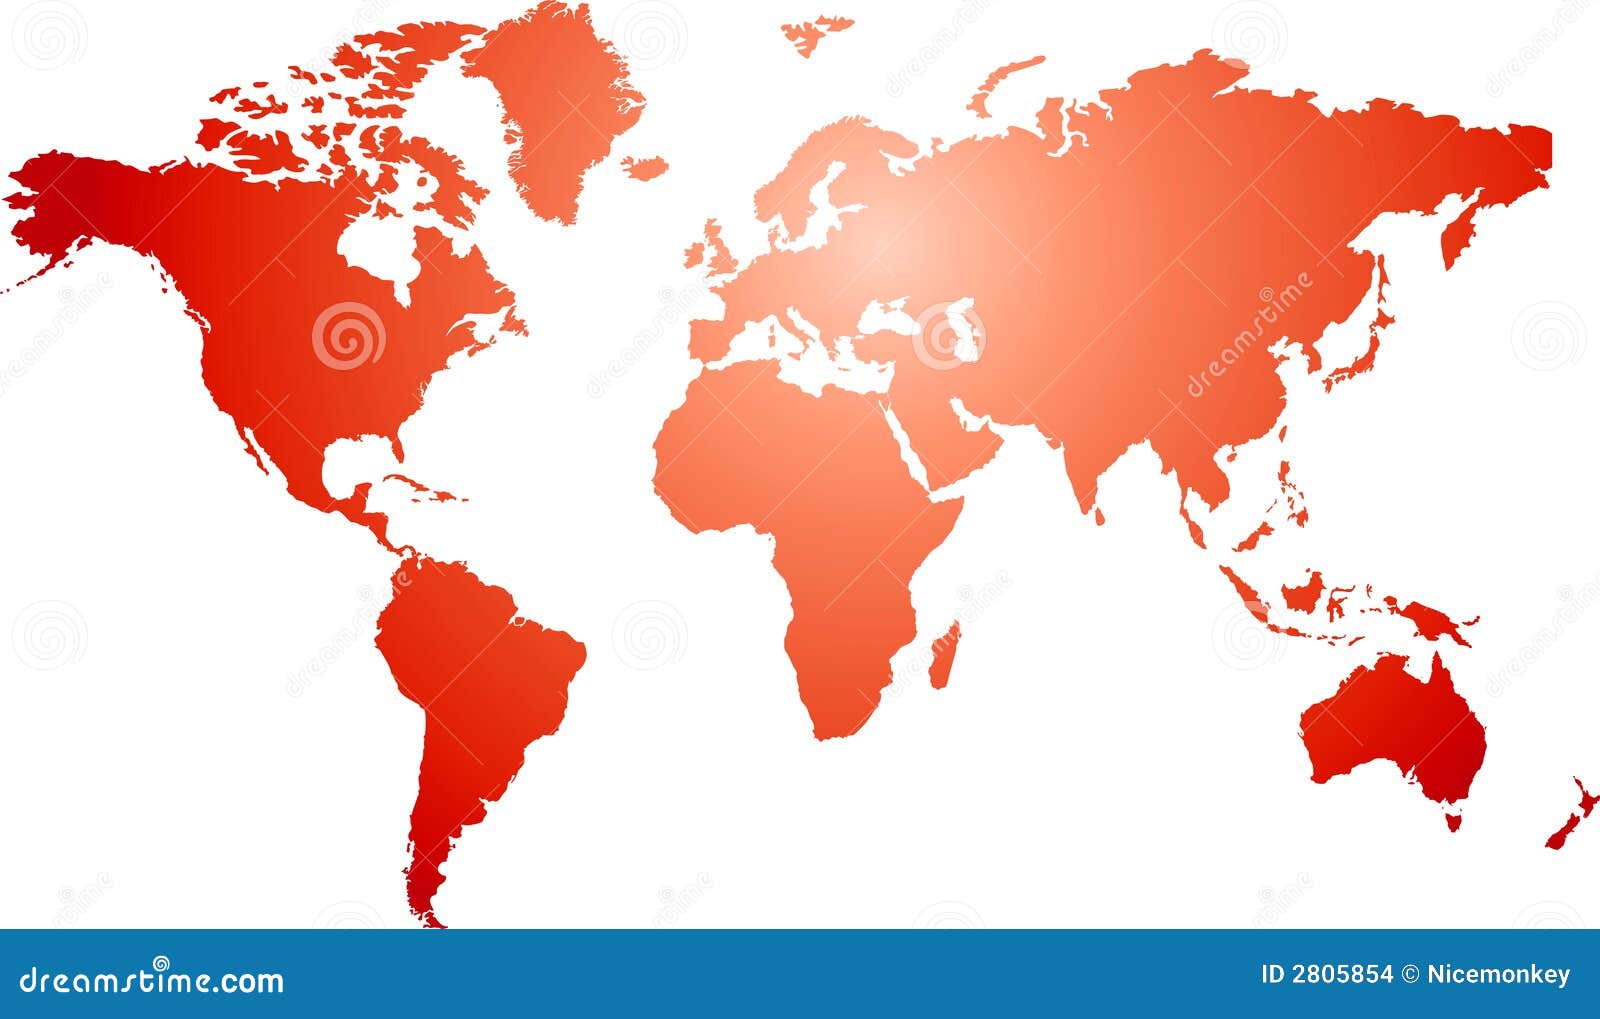 World map stock illustration. Illustration of gradient - 2805854